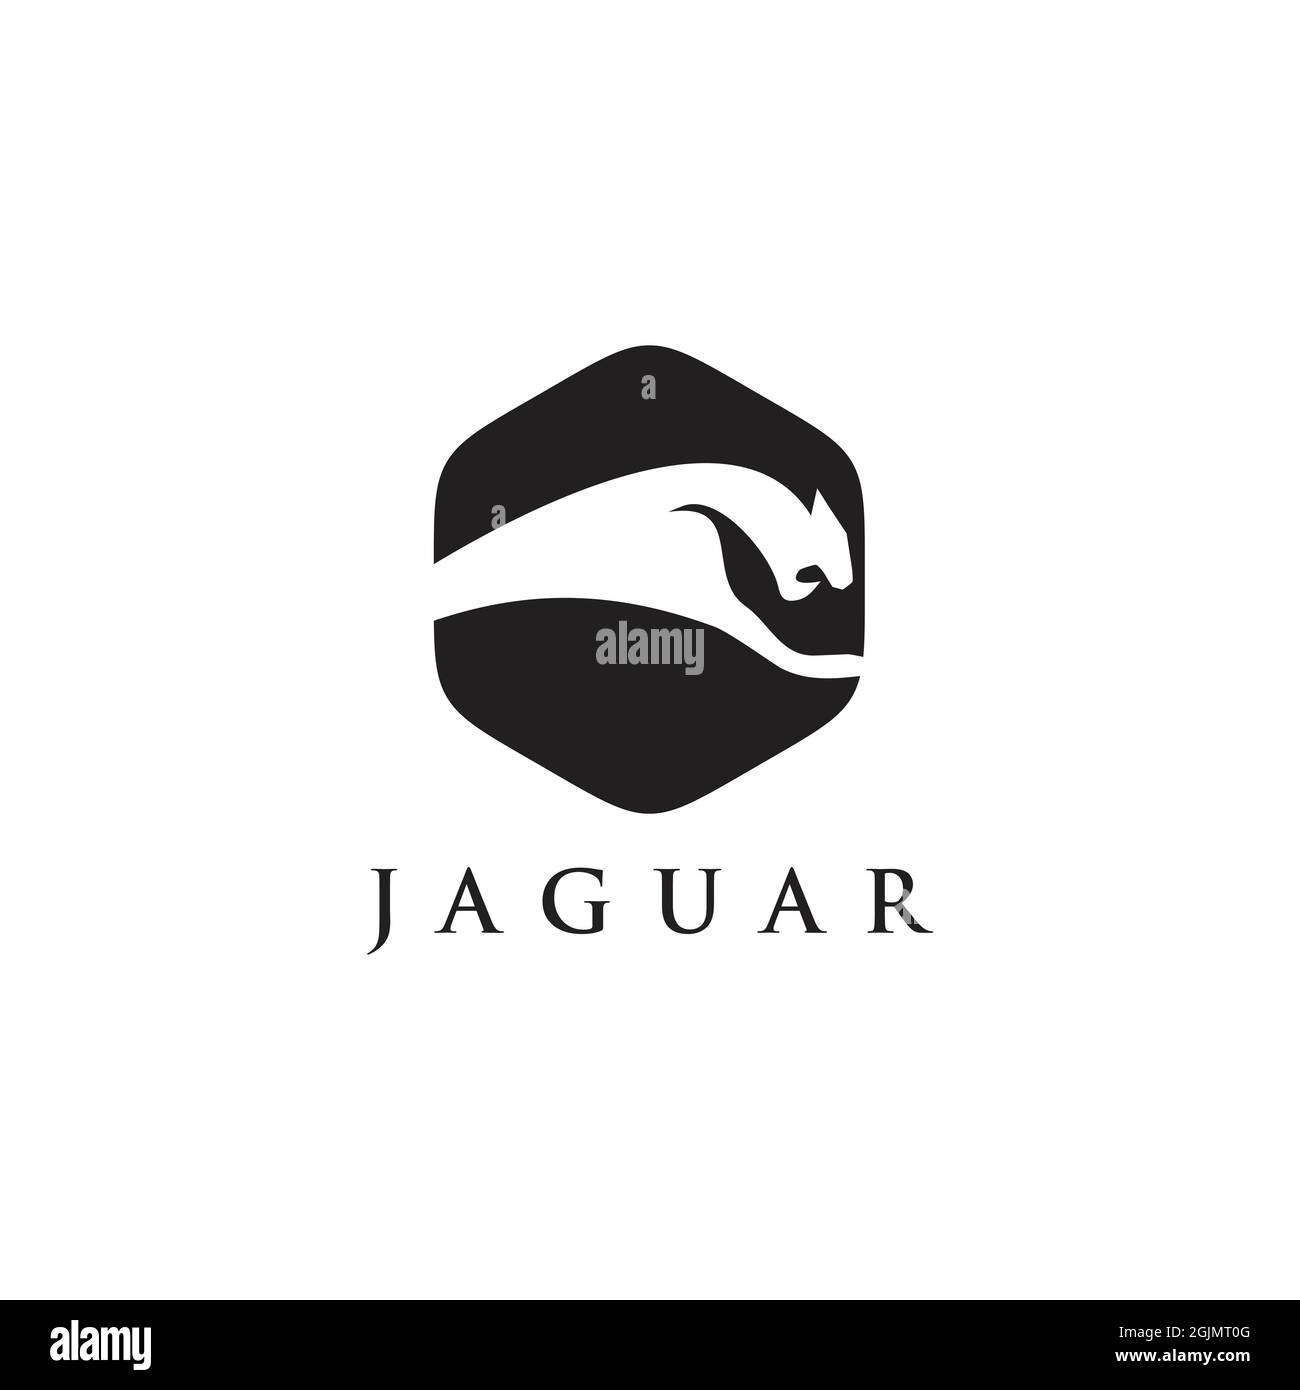 Jaguar logo design vector template illustration Stock Vector